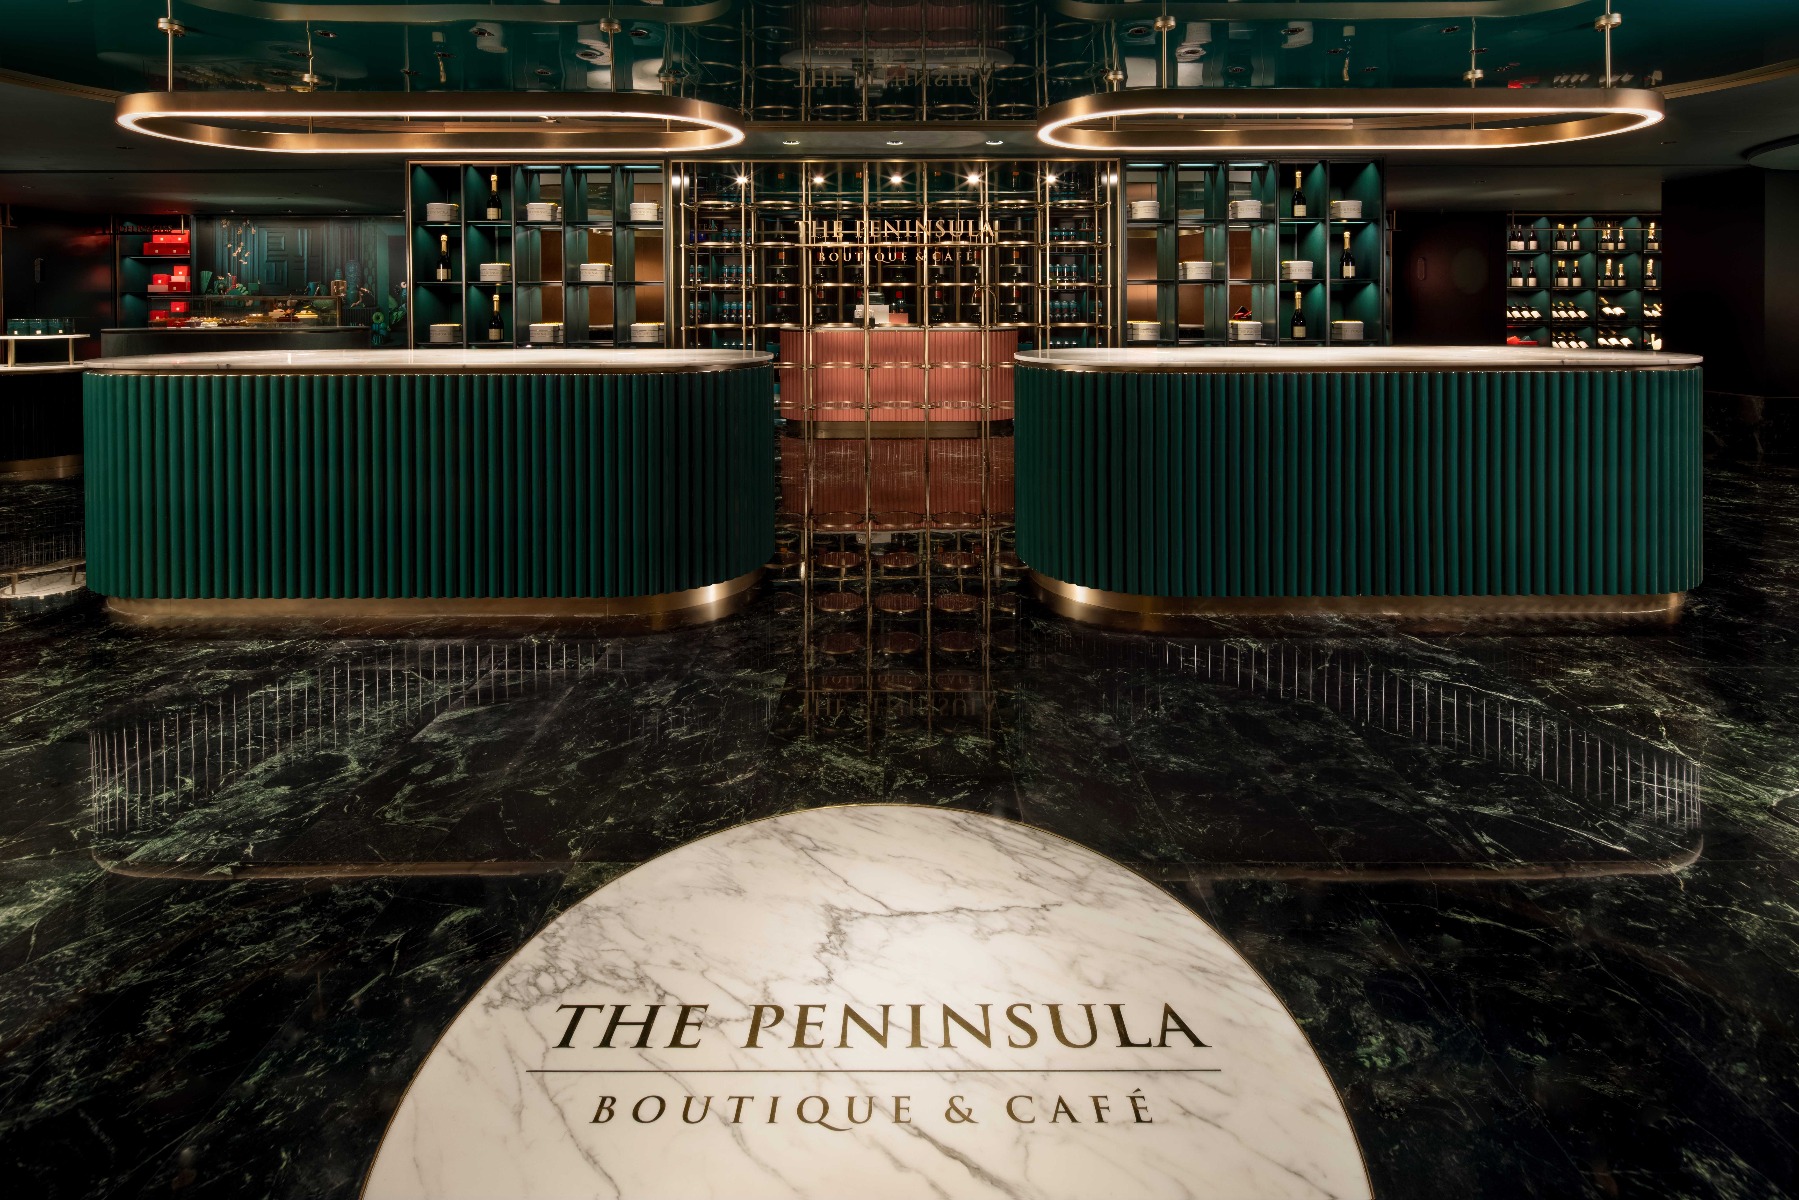 The Peninsula Boutique & Café in Belgravia